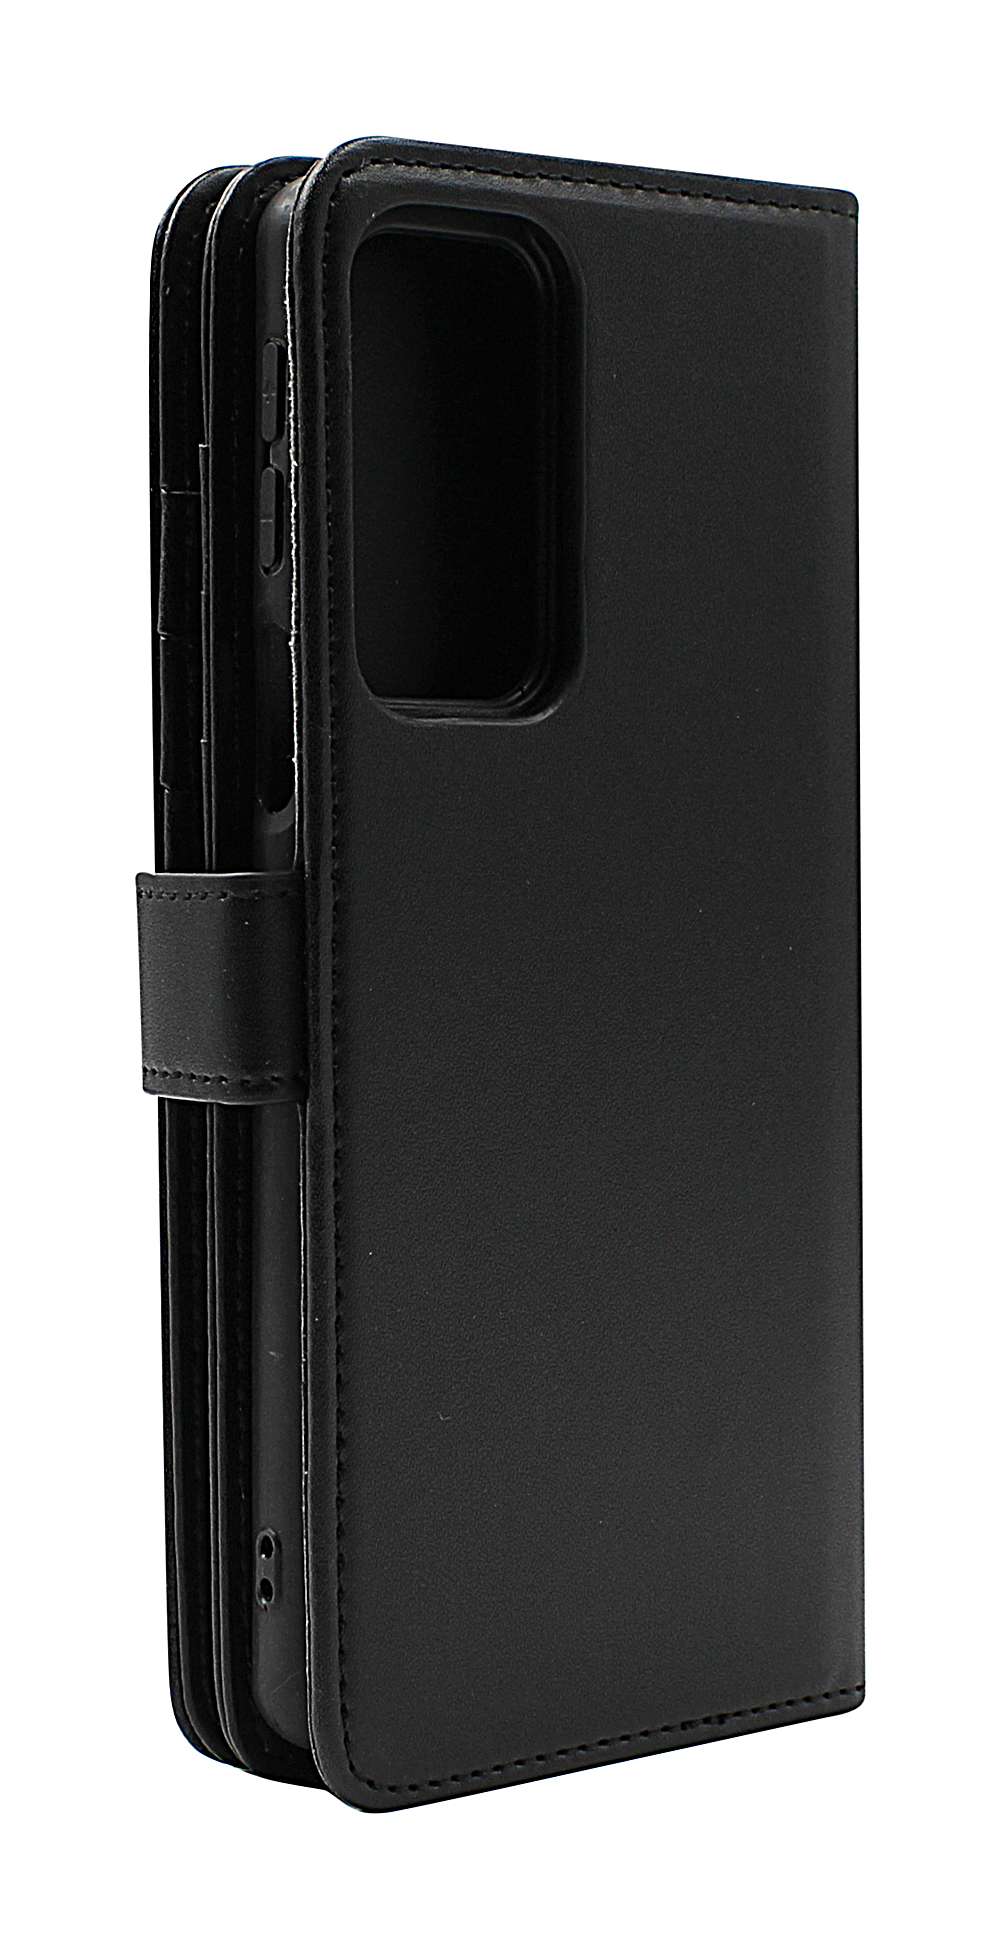 Skimblocker XL Magnet Wallet Motorola Edge 20